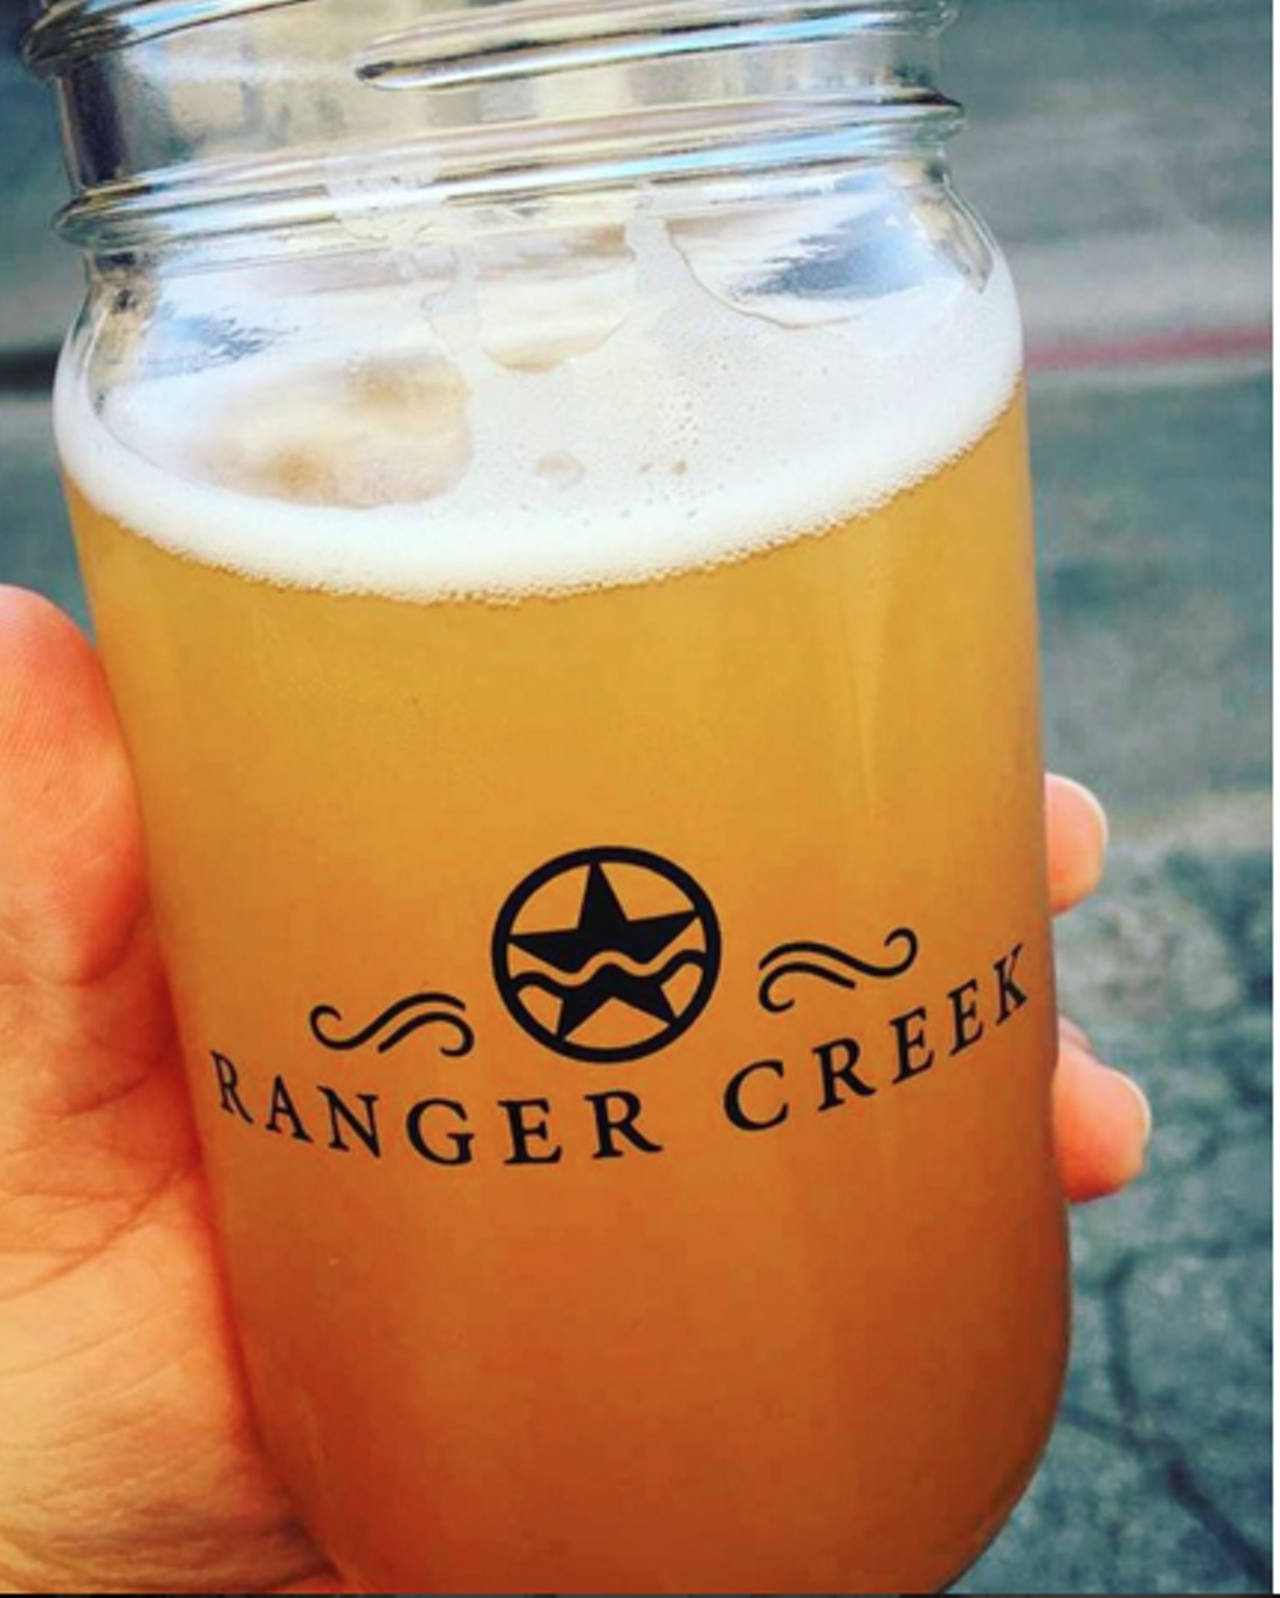  Ranger Creek Brewing & Distilling
Serving: Dry Hopped Berliner, Ranger Creek OPA, Sunday Morning Coming Down and Ranger Creek La Bestia
Photo via Instagram/ analisa731